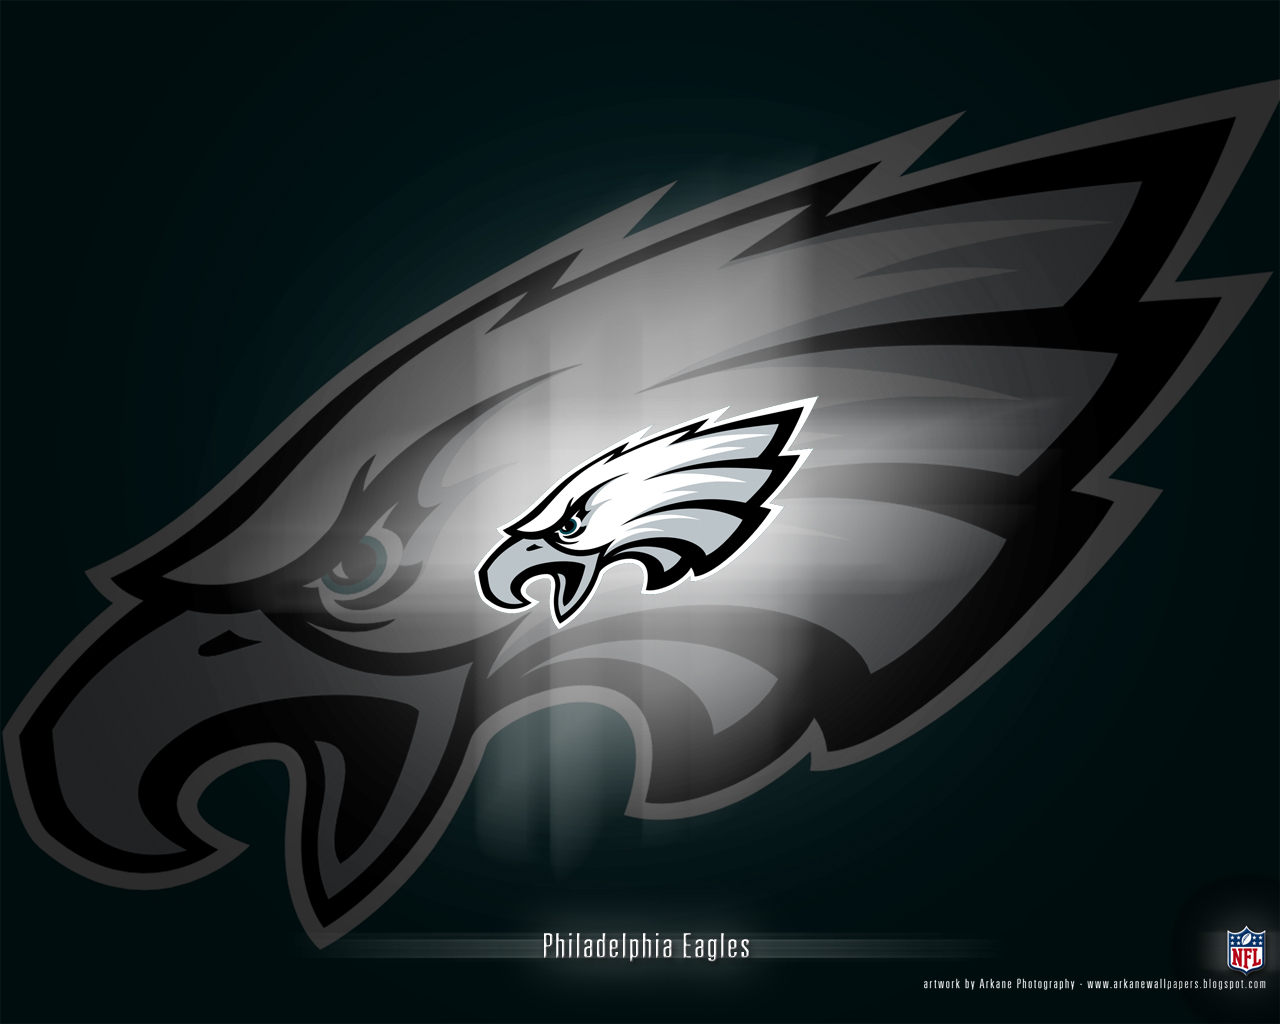 Philadelphia Eagles Wallpaper Nfl Pic Desktop